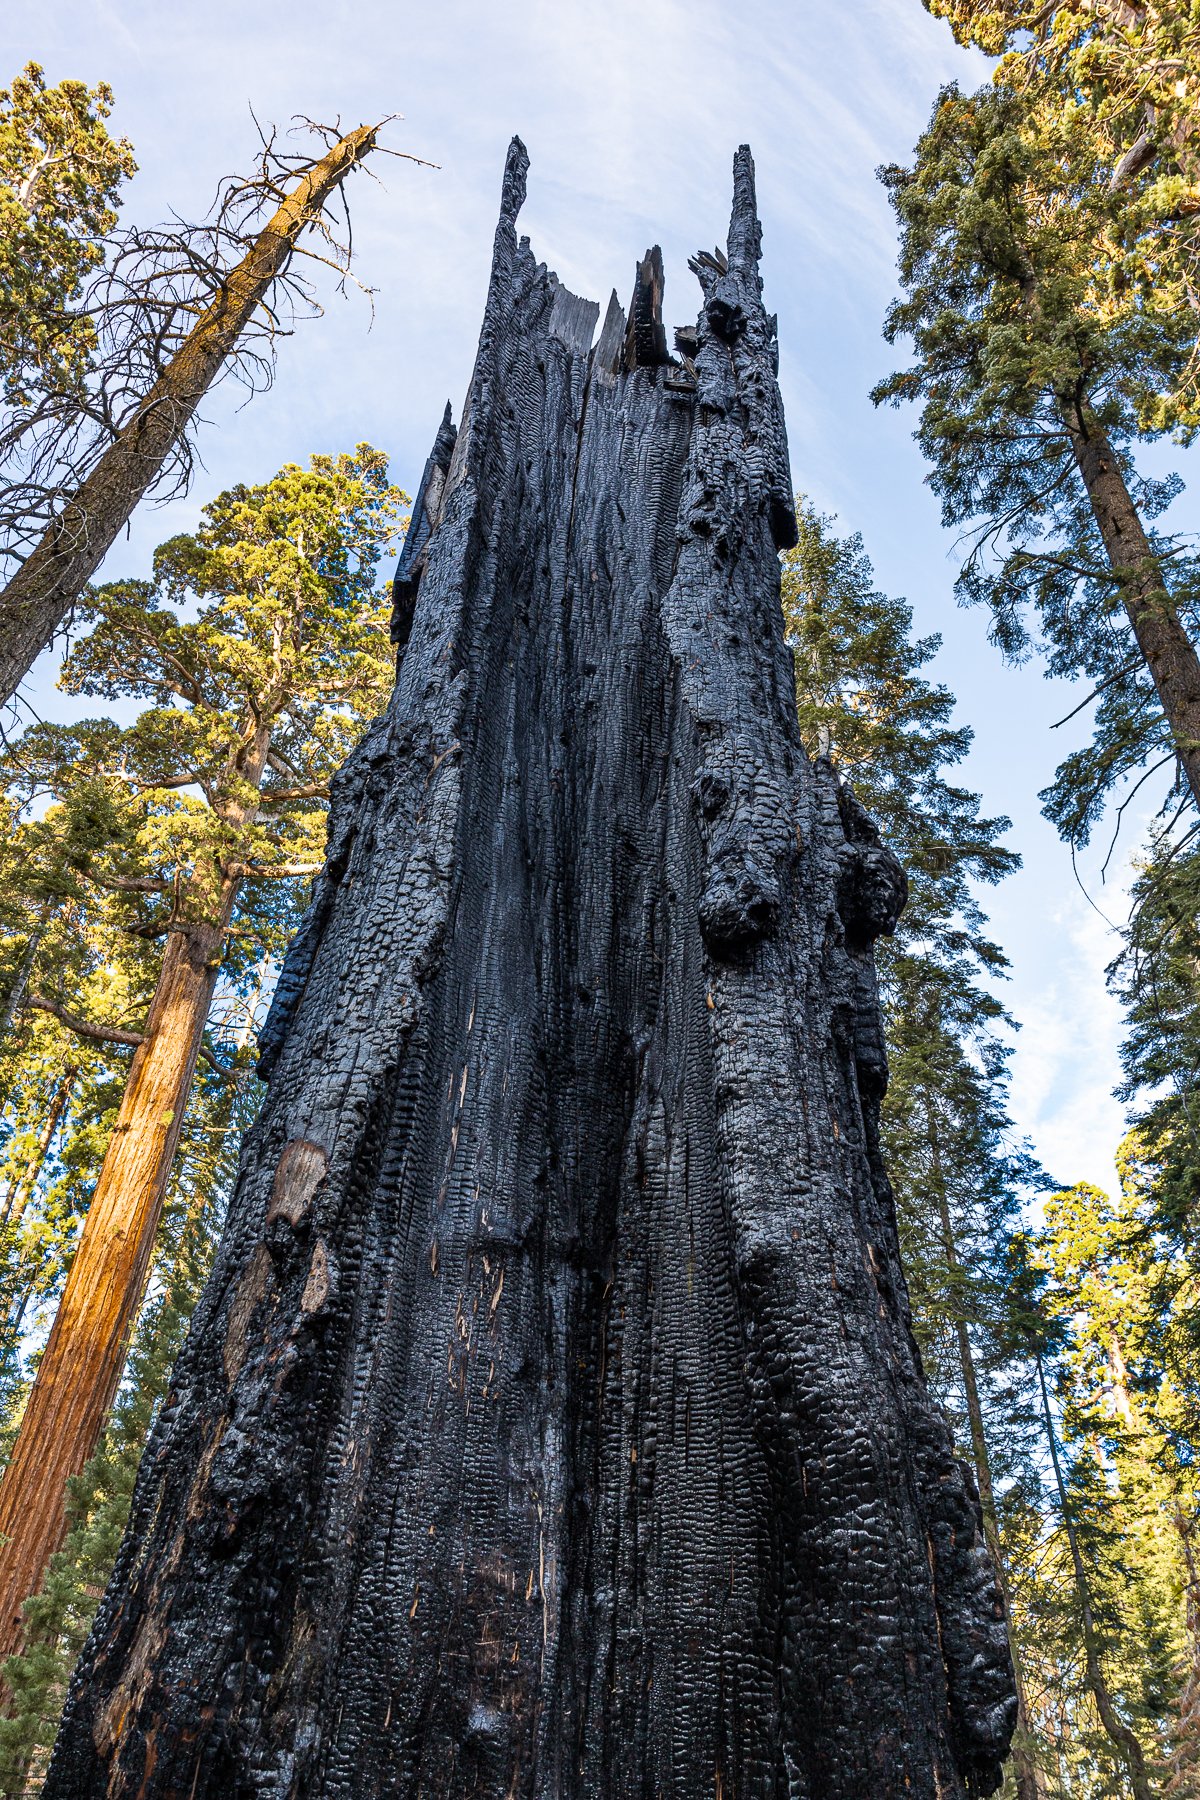 redwoods-sequoia-kings-canyon-national-park-burnt-tree-trunk-bark-coal-charcoal-dead-plant-fire.jpg